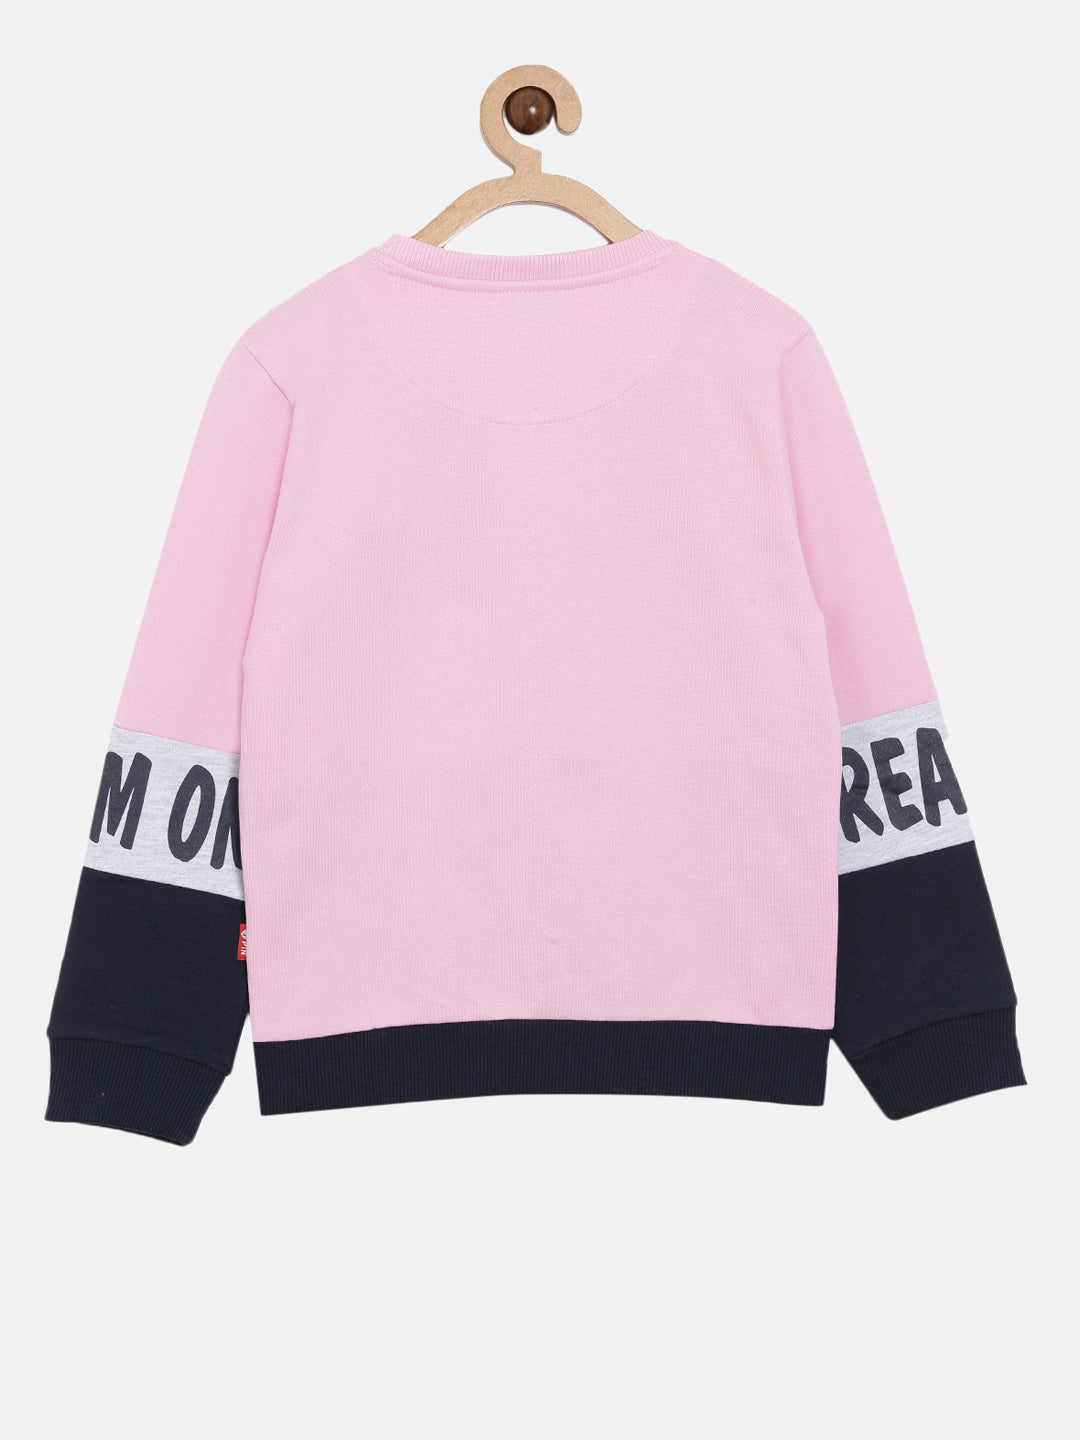 Stylish Roundneck Sweatshirt for Girls